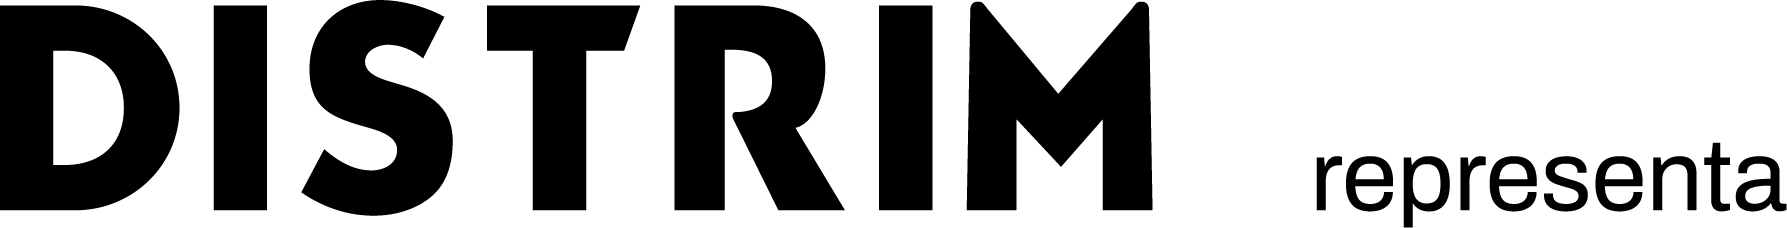 Logo DISTRIM representa